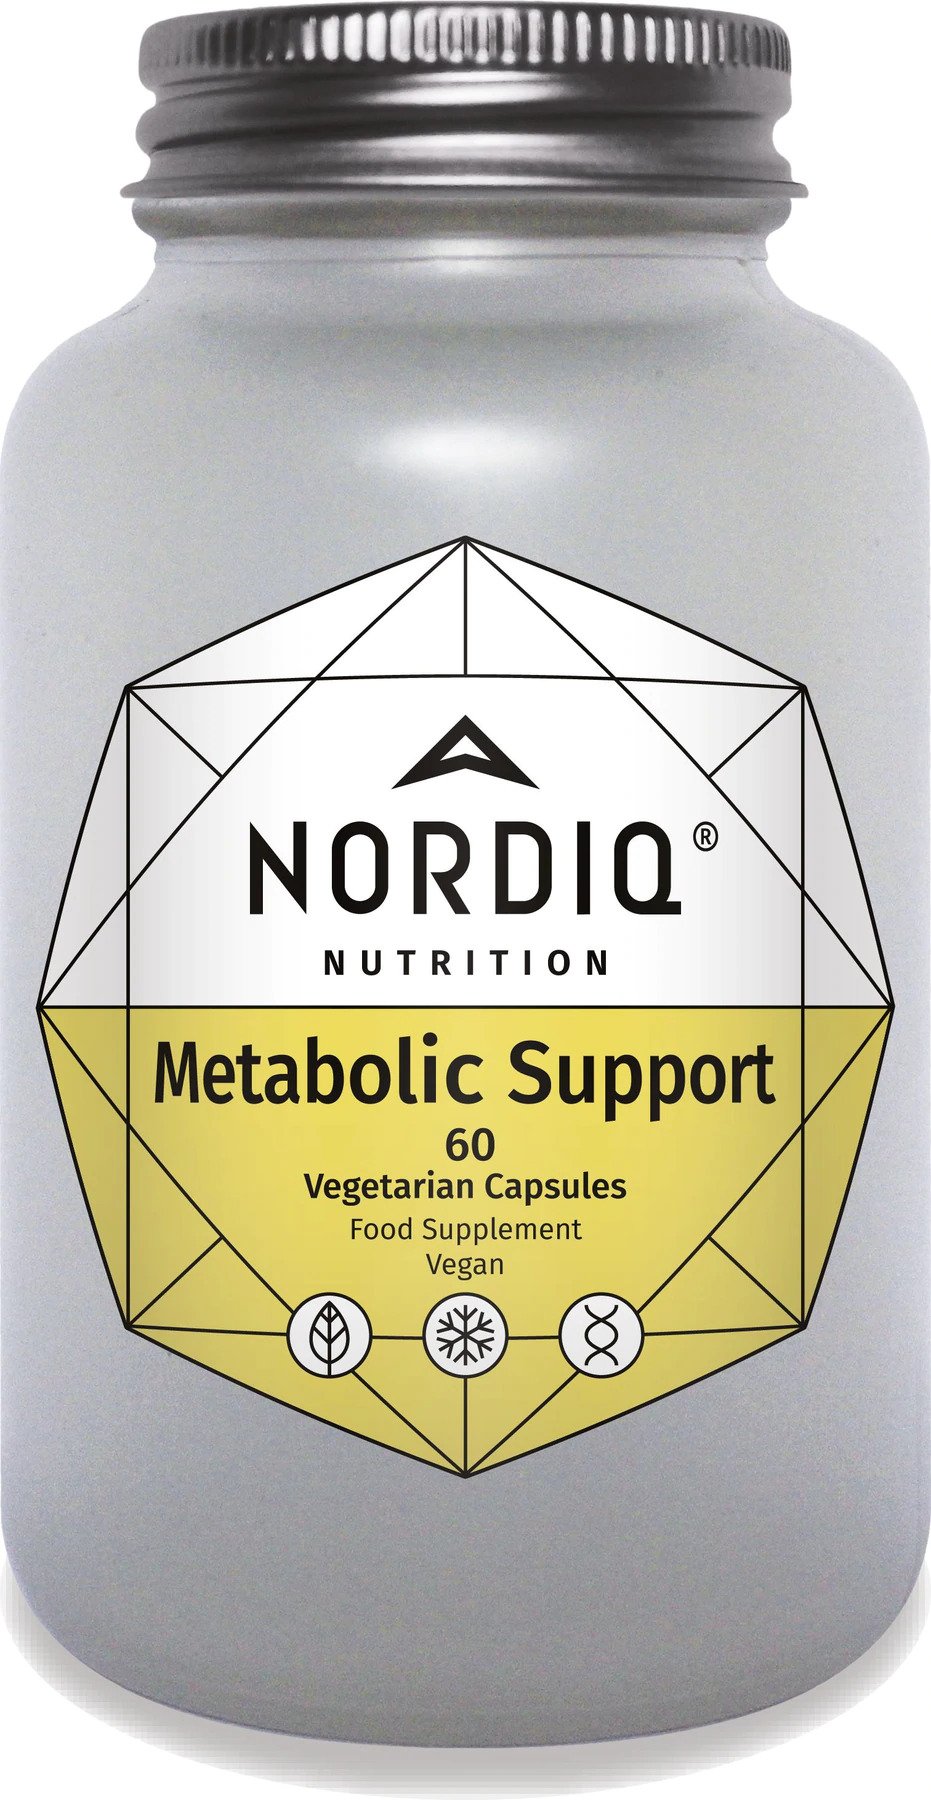 NORDIQ Nutrition Metabolic Support